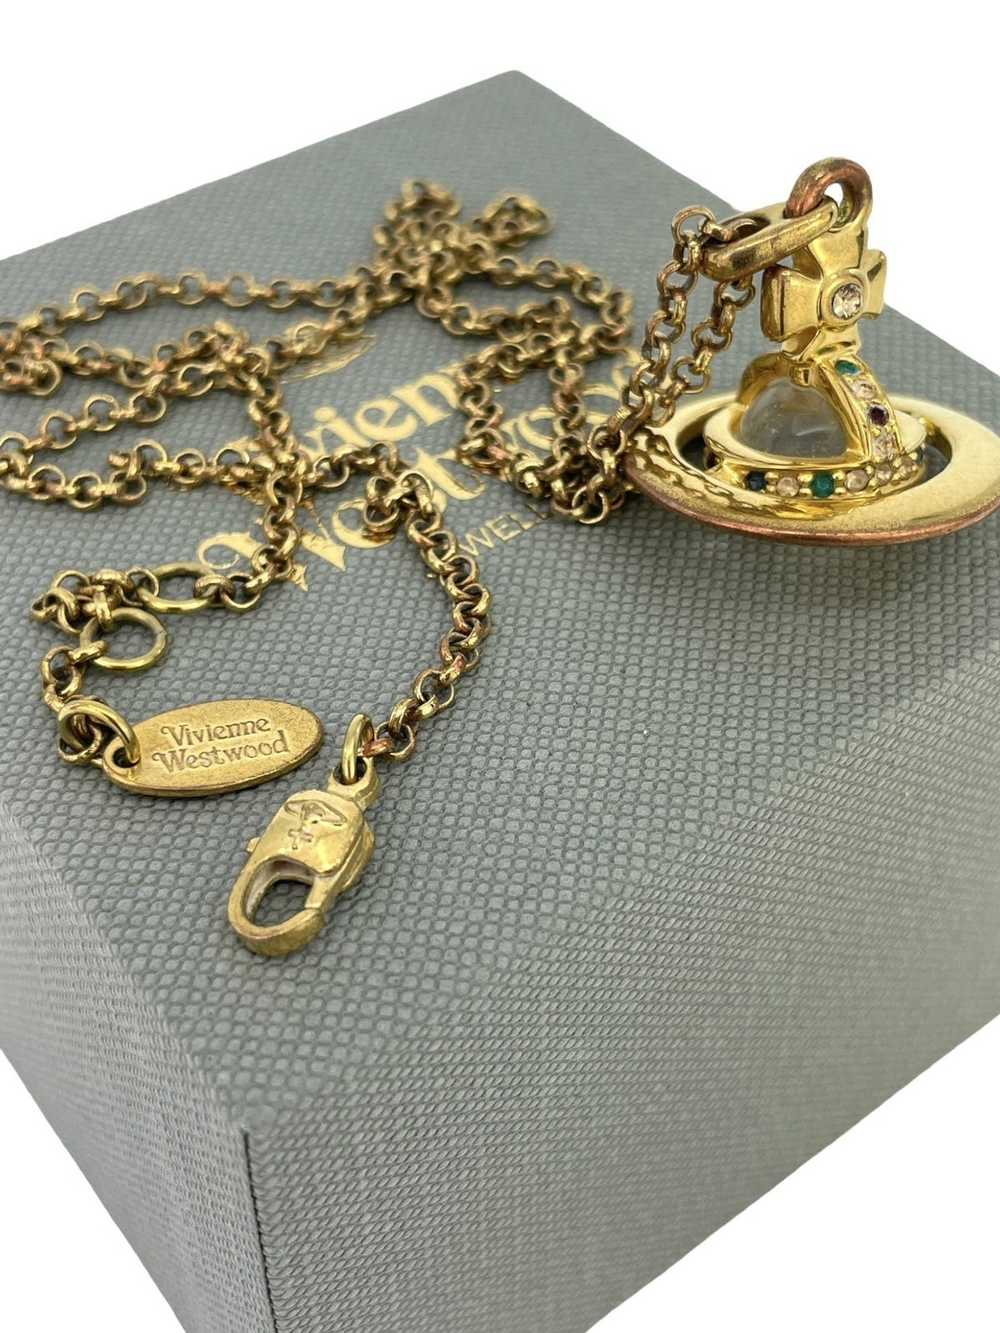 Vivienne Westwood Gold 3D Orb Necklace - image 10